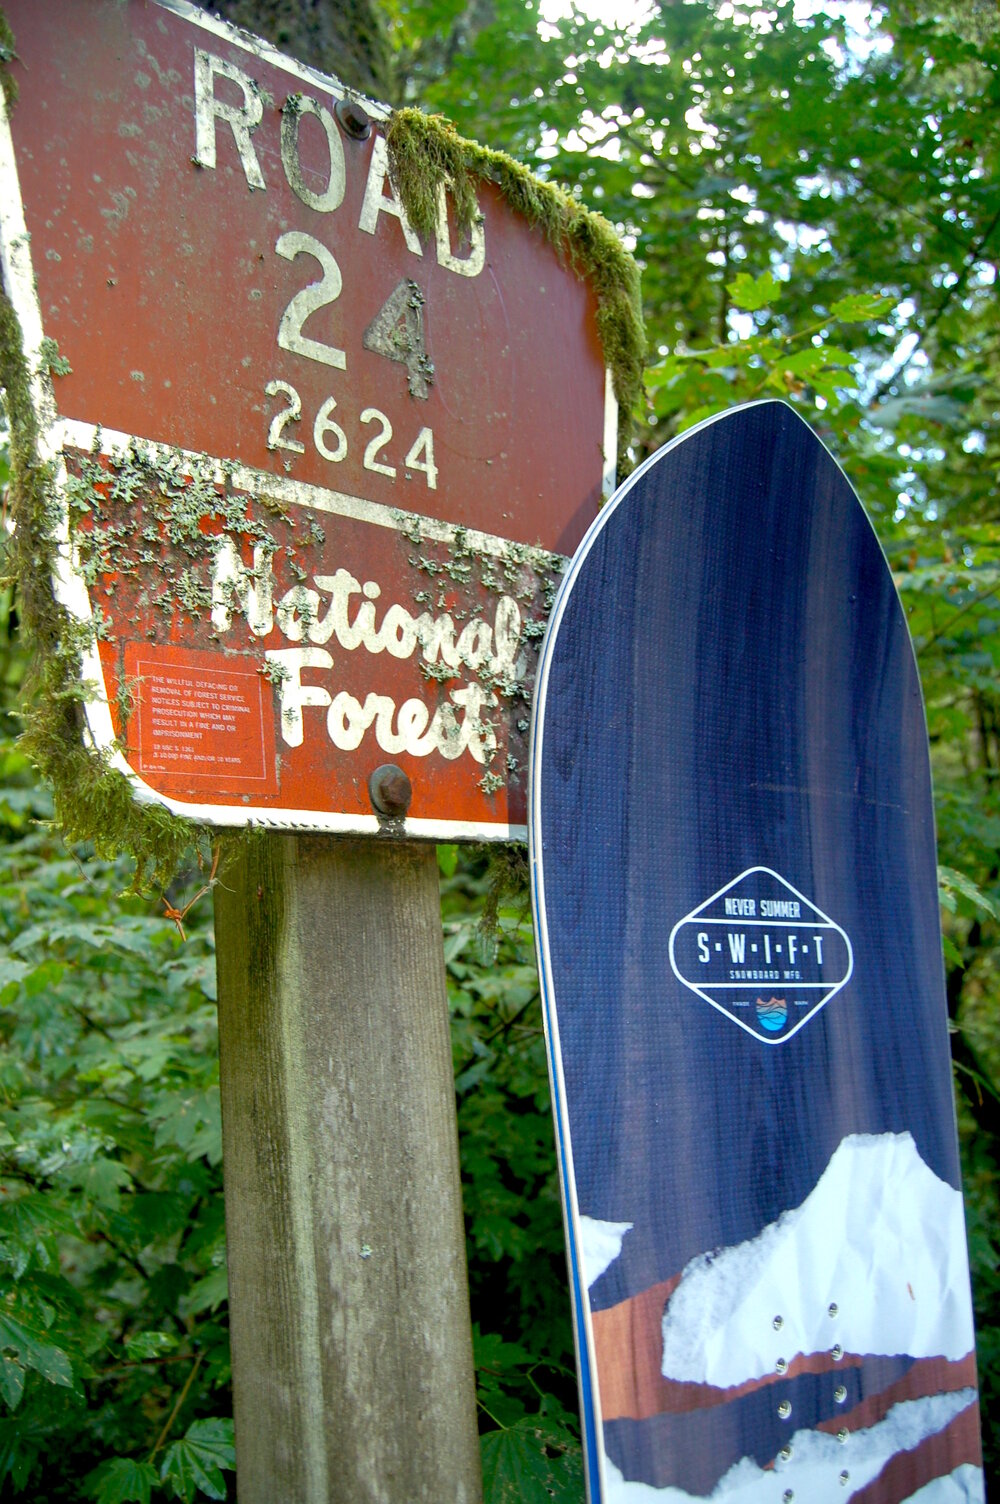 Never-Summer-Swift-powder-snowboard-forest-service.jpg